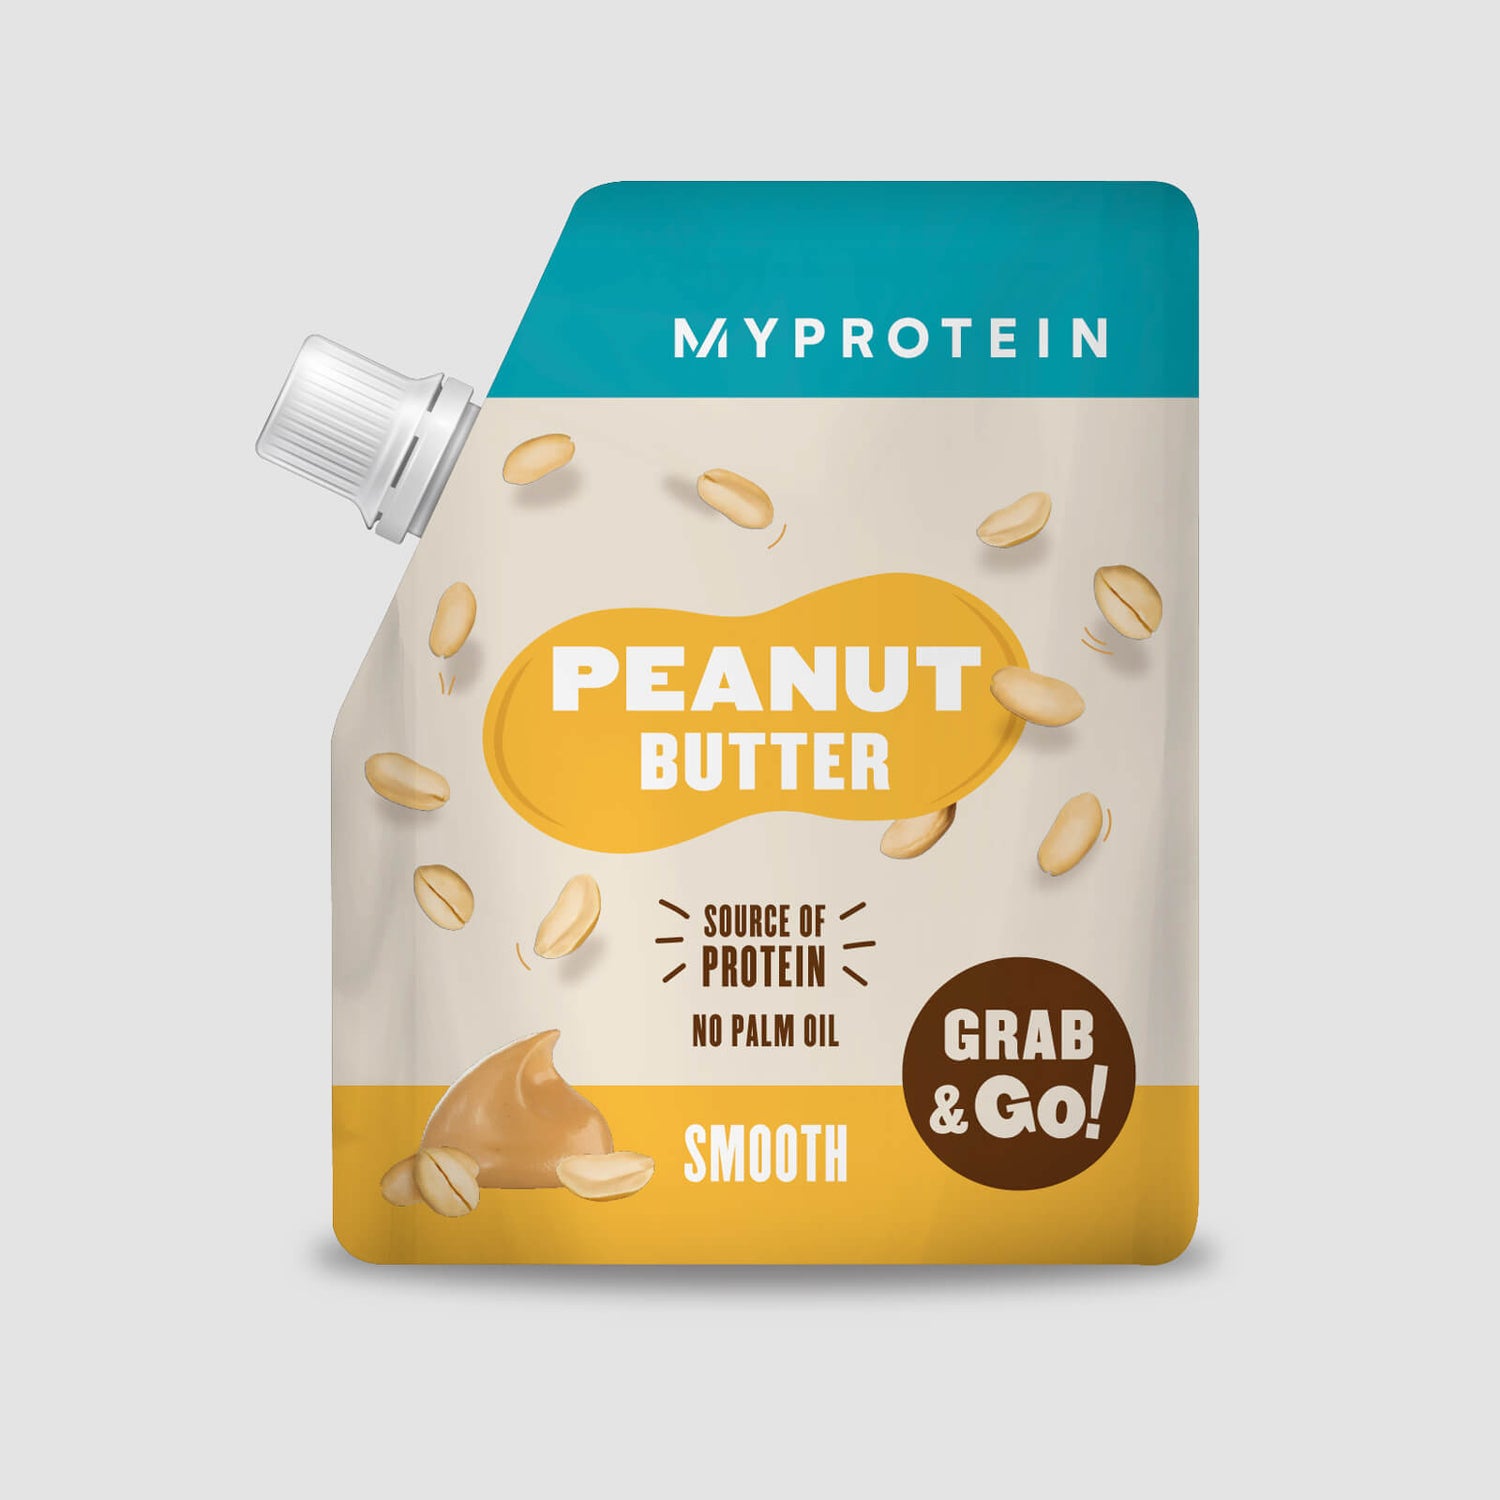 Peanut Butter - Original - Smooth